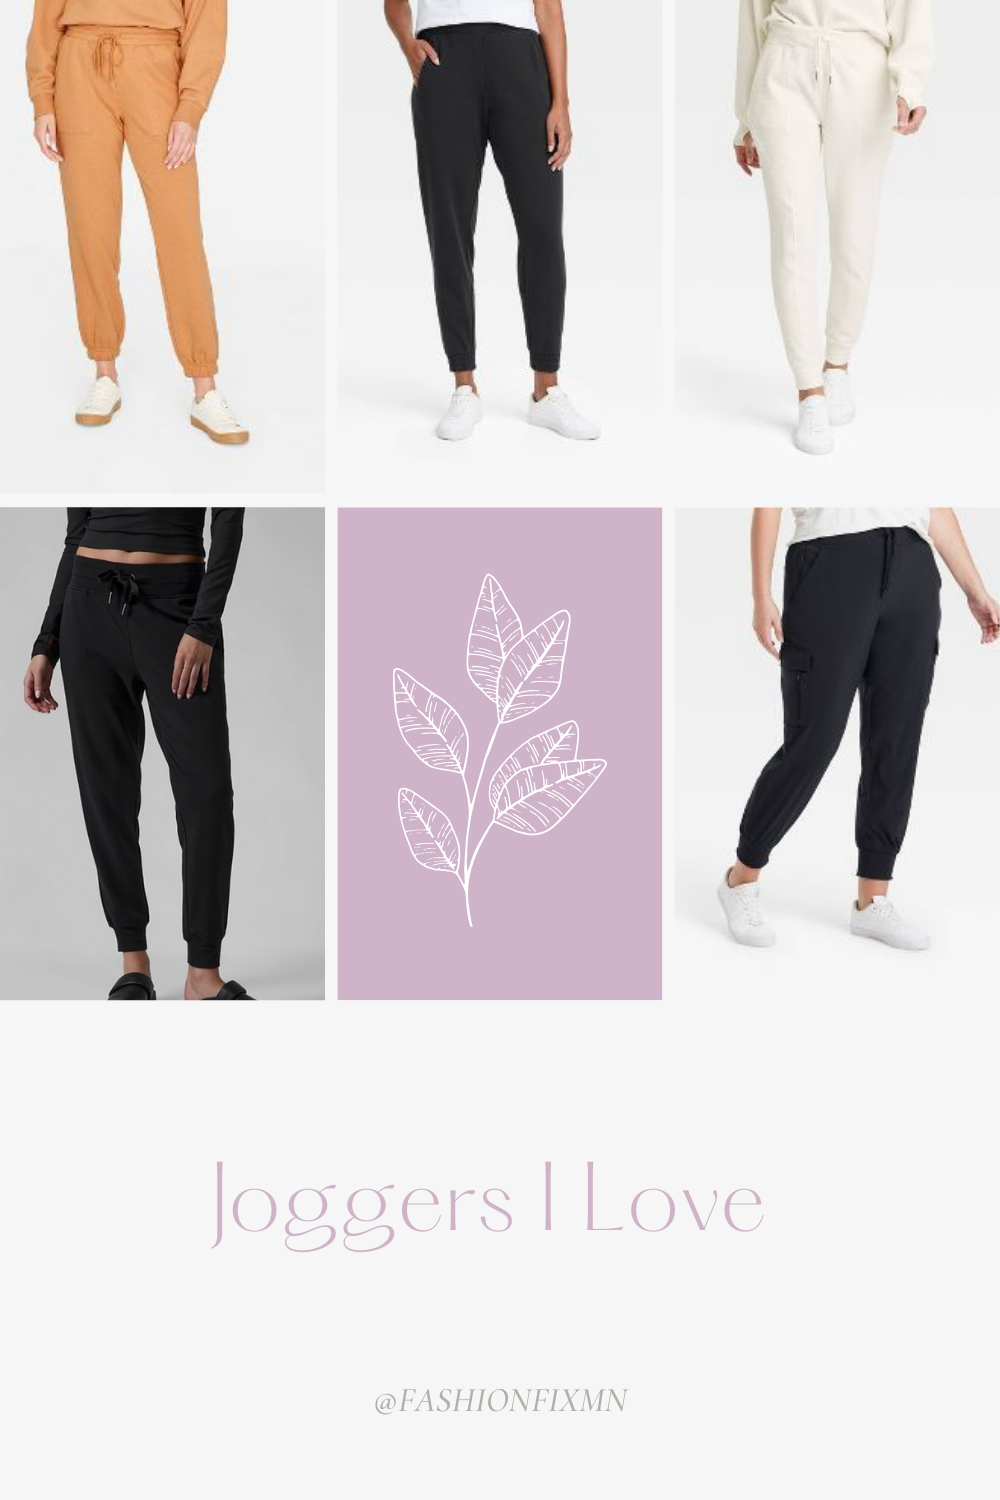 Joggers I love — Fashion Fix